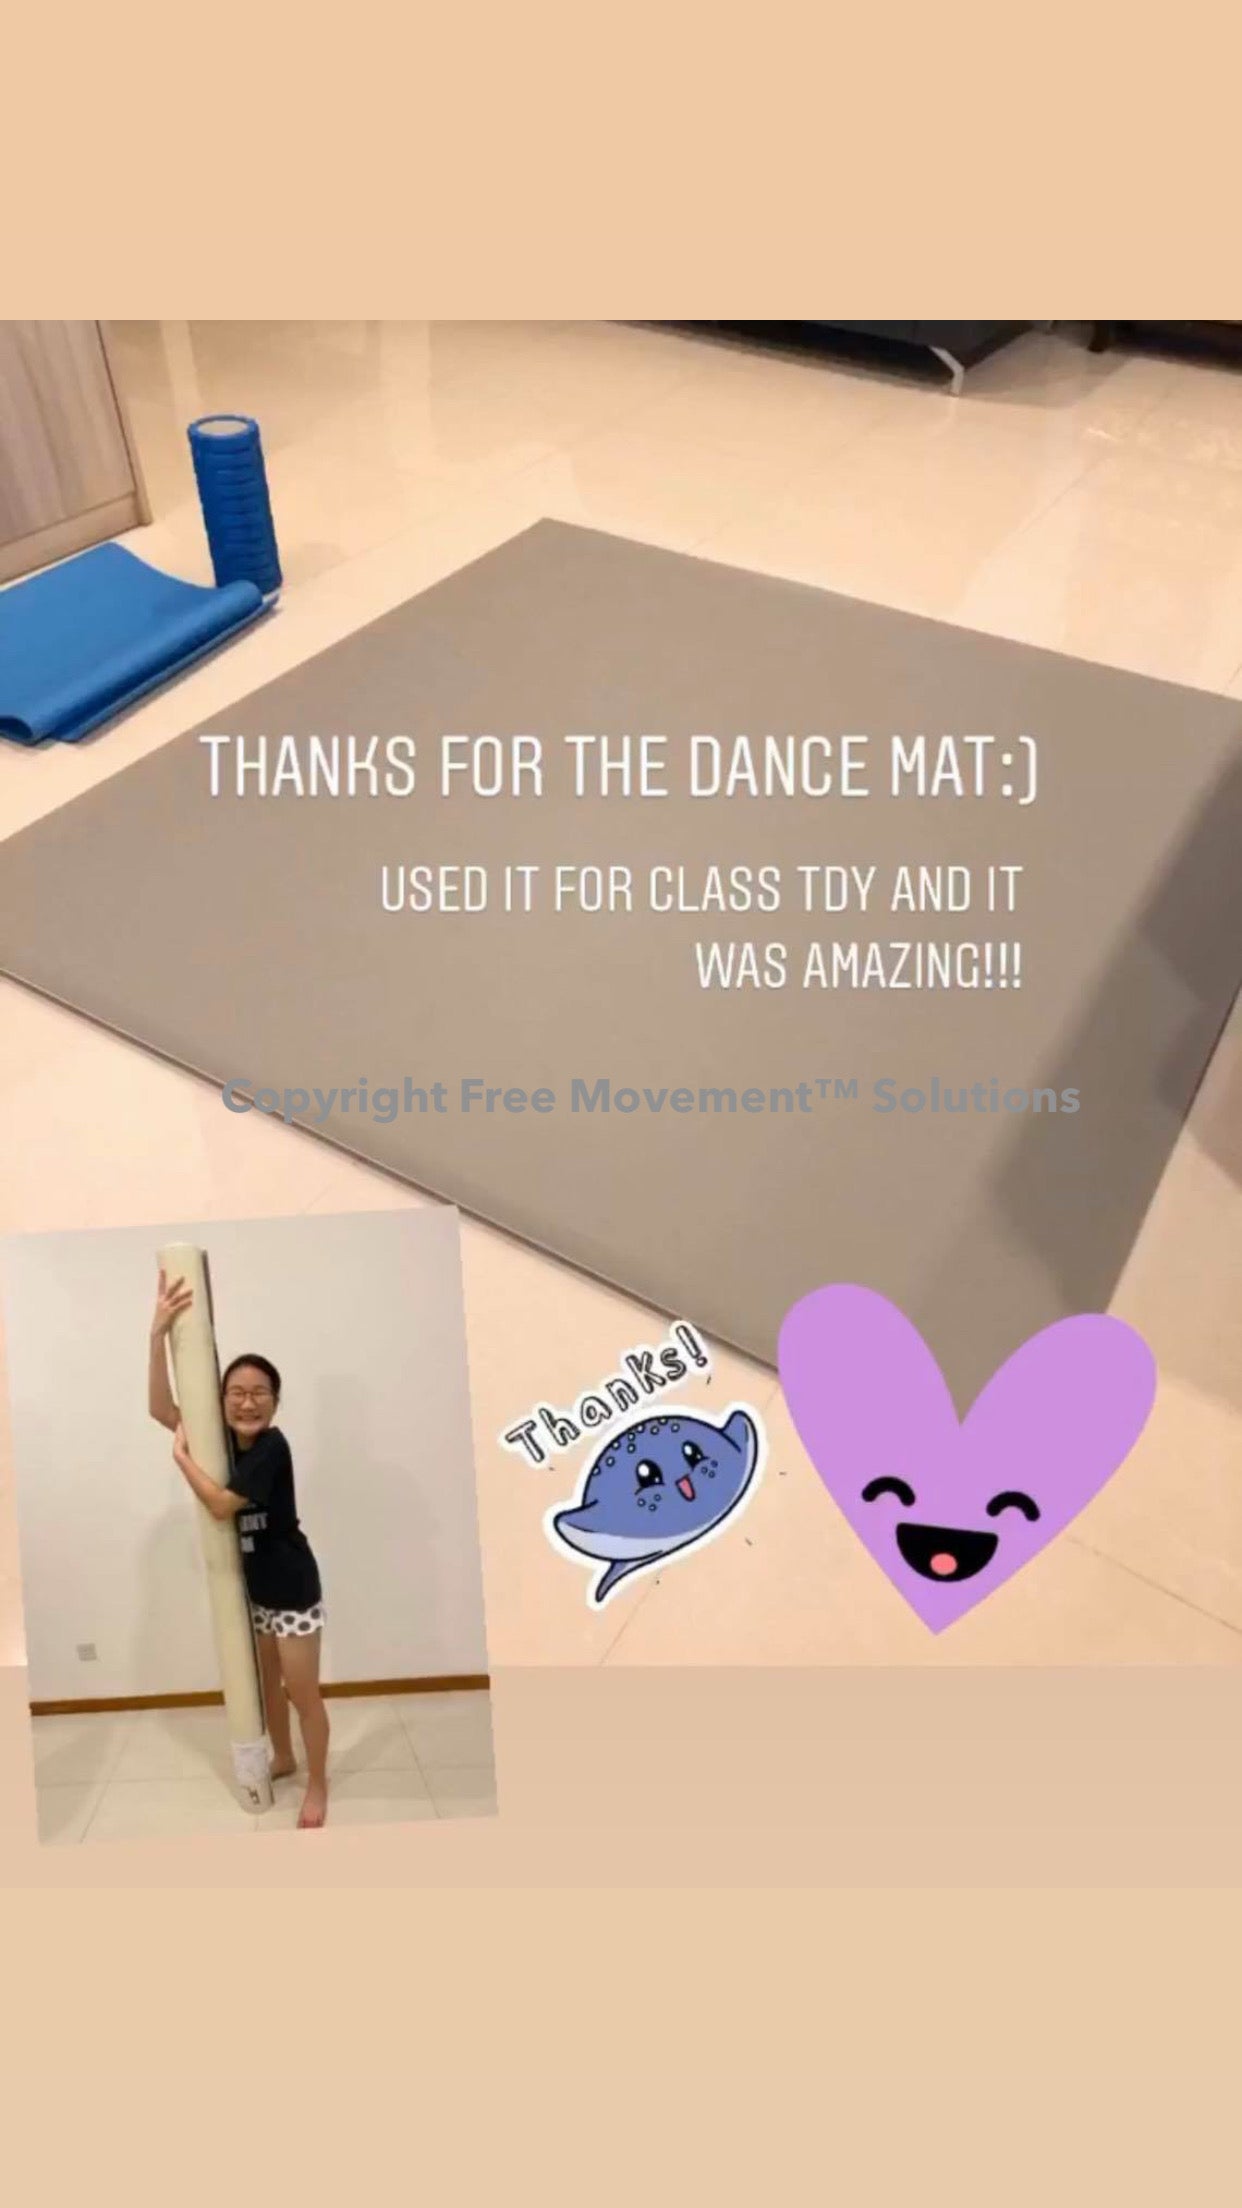 Studio Marley Mat – Free Movement™ Dance Solutions